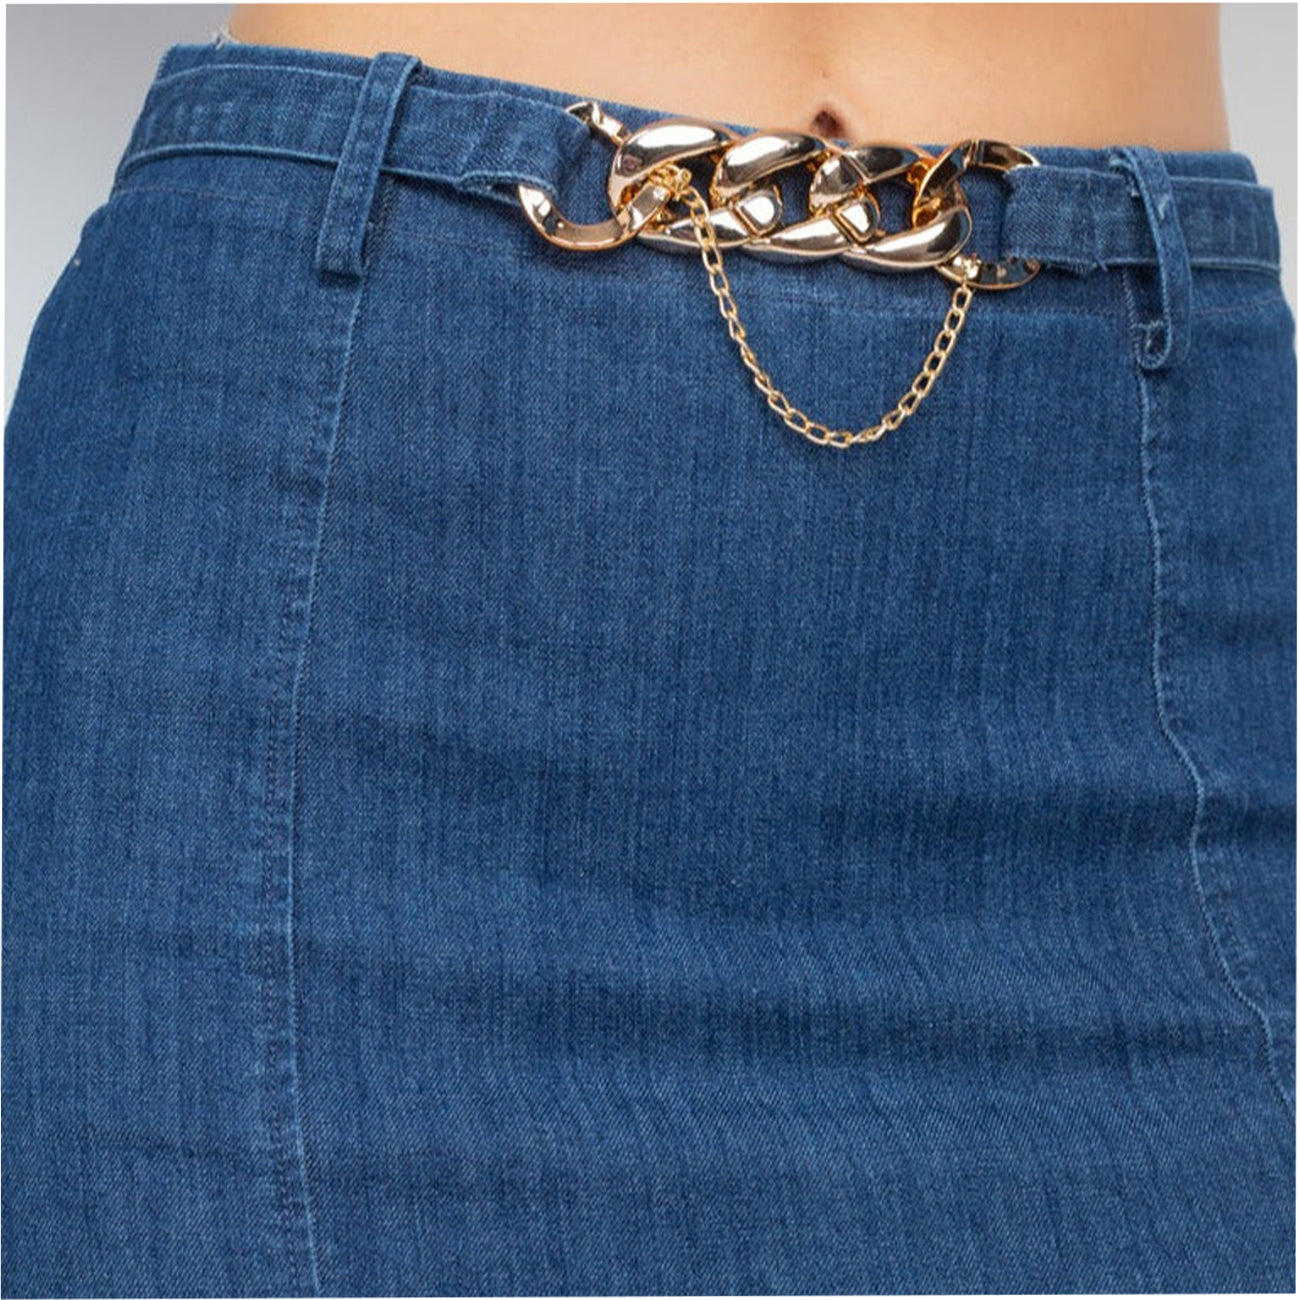 High-rise Belted Chain Denim Skirt
